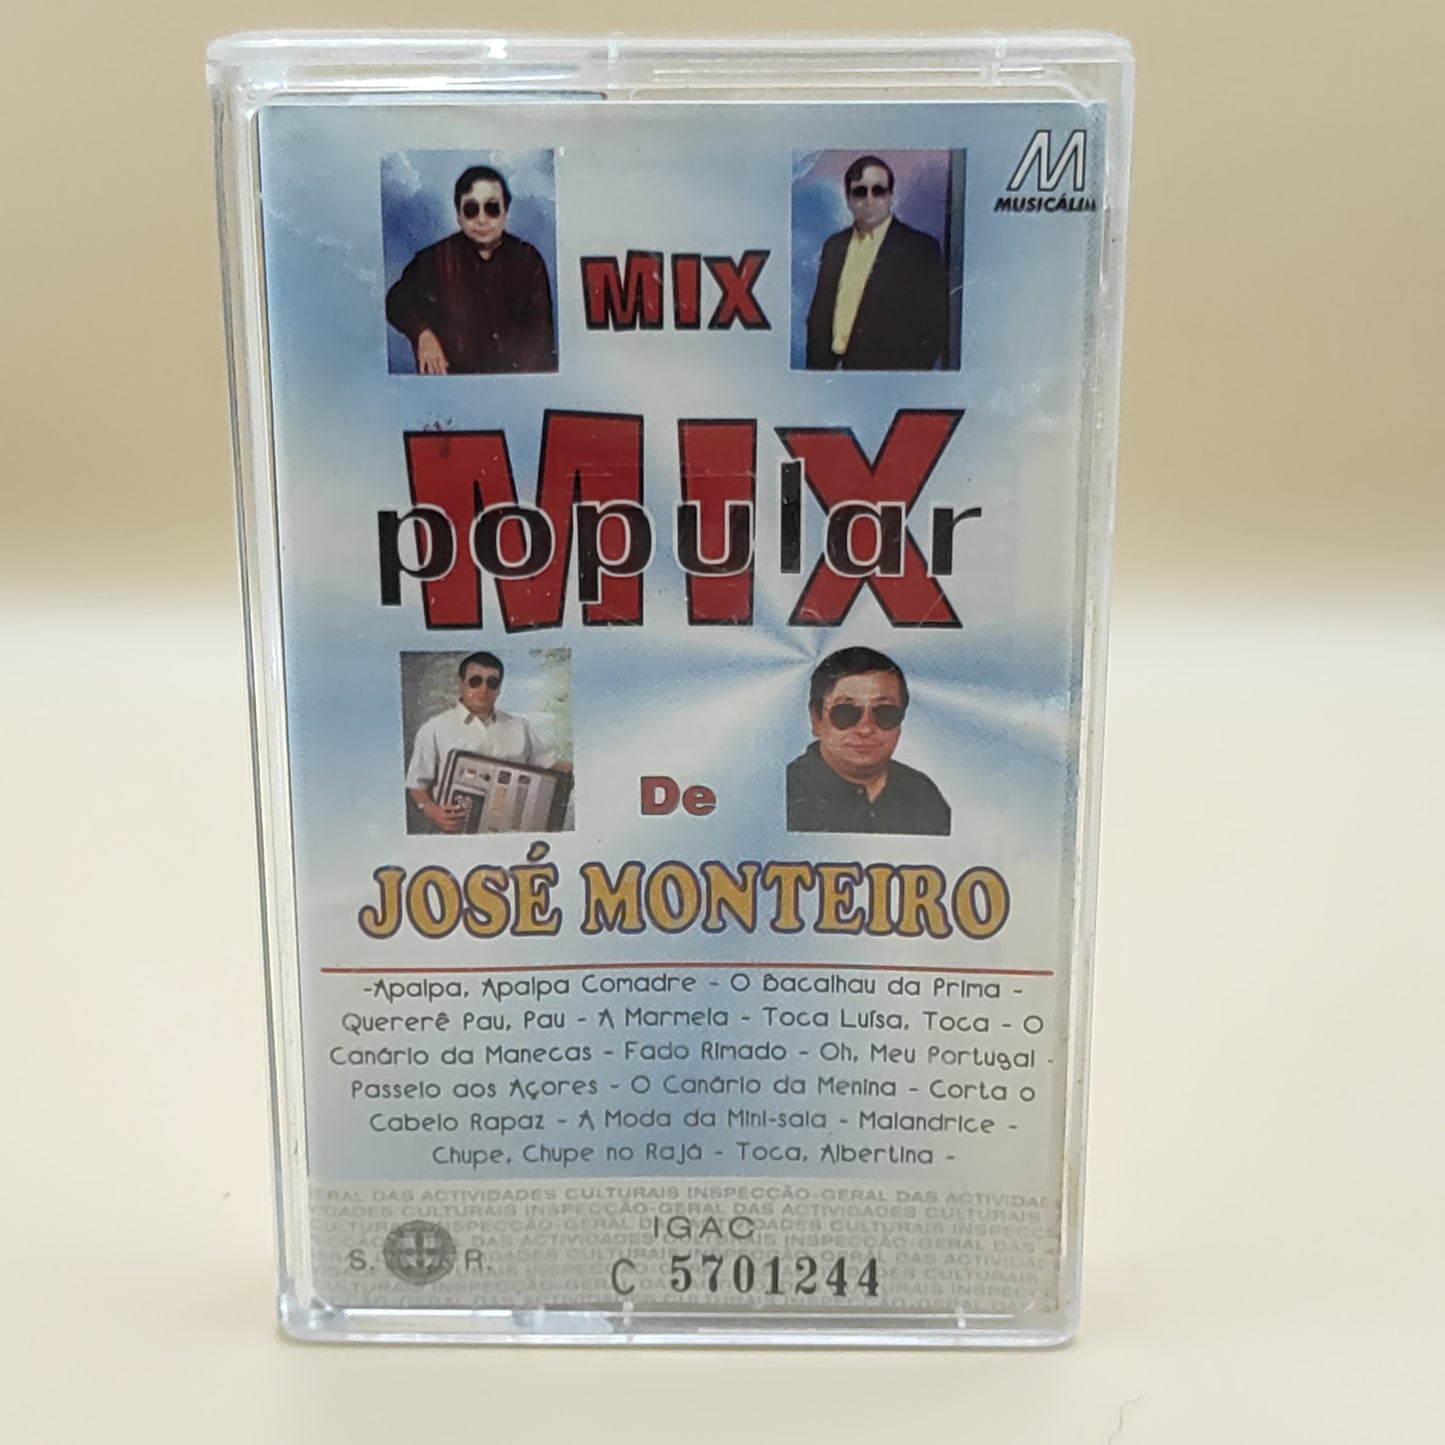 MIx Popular de José Monteiro